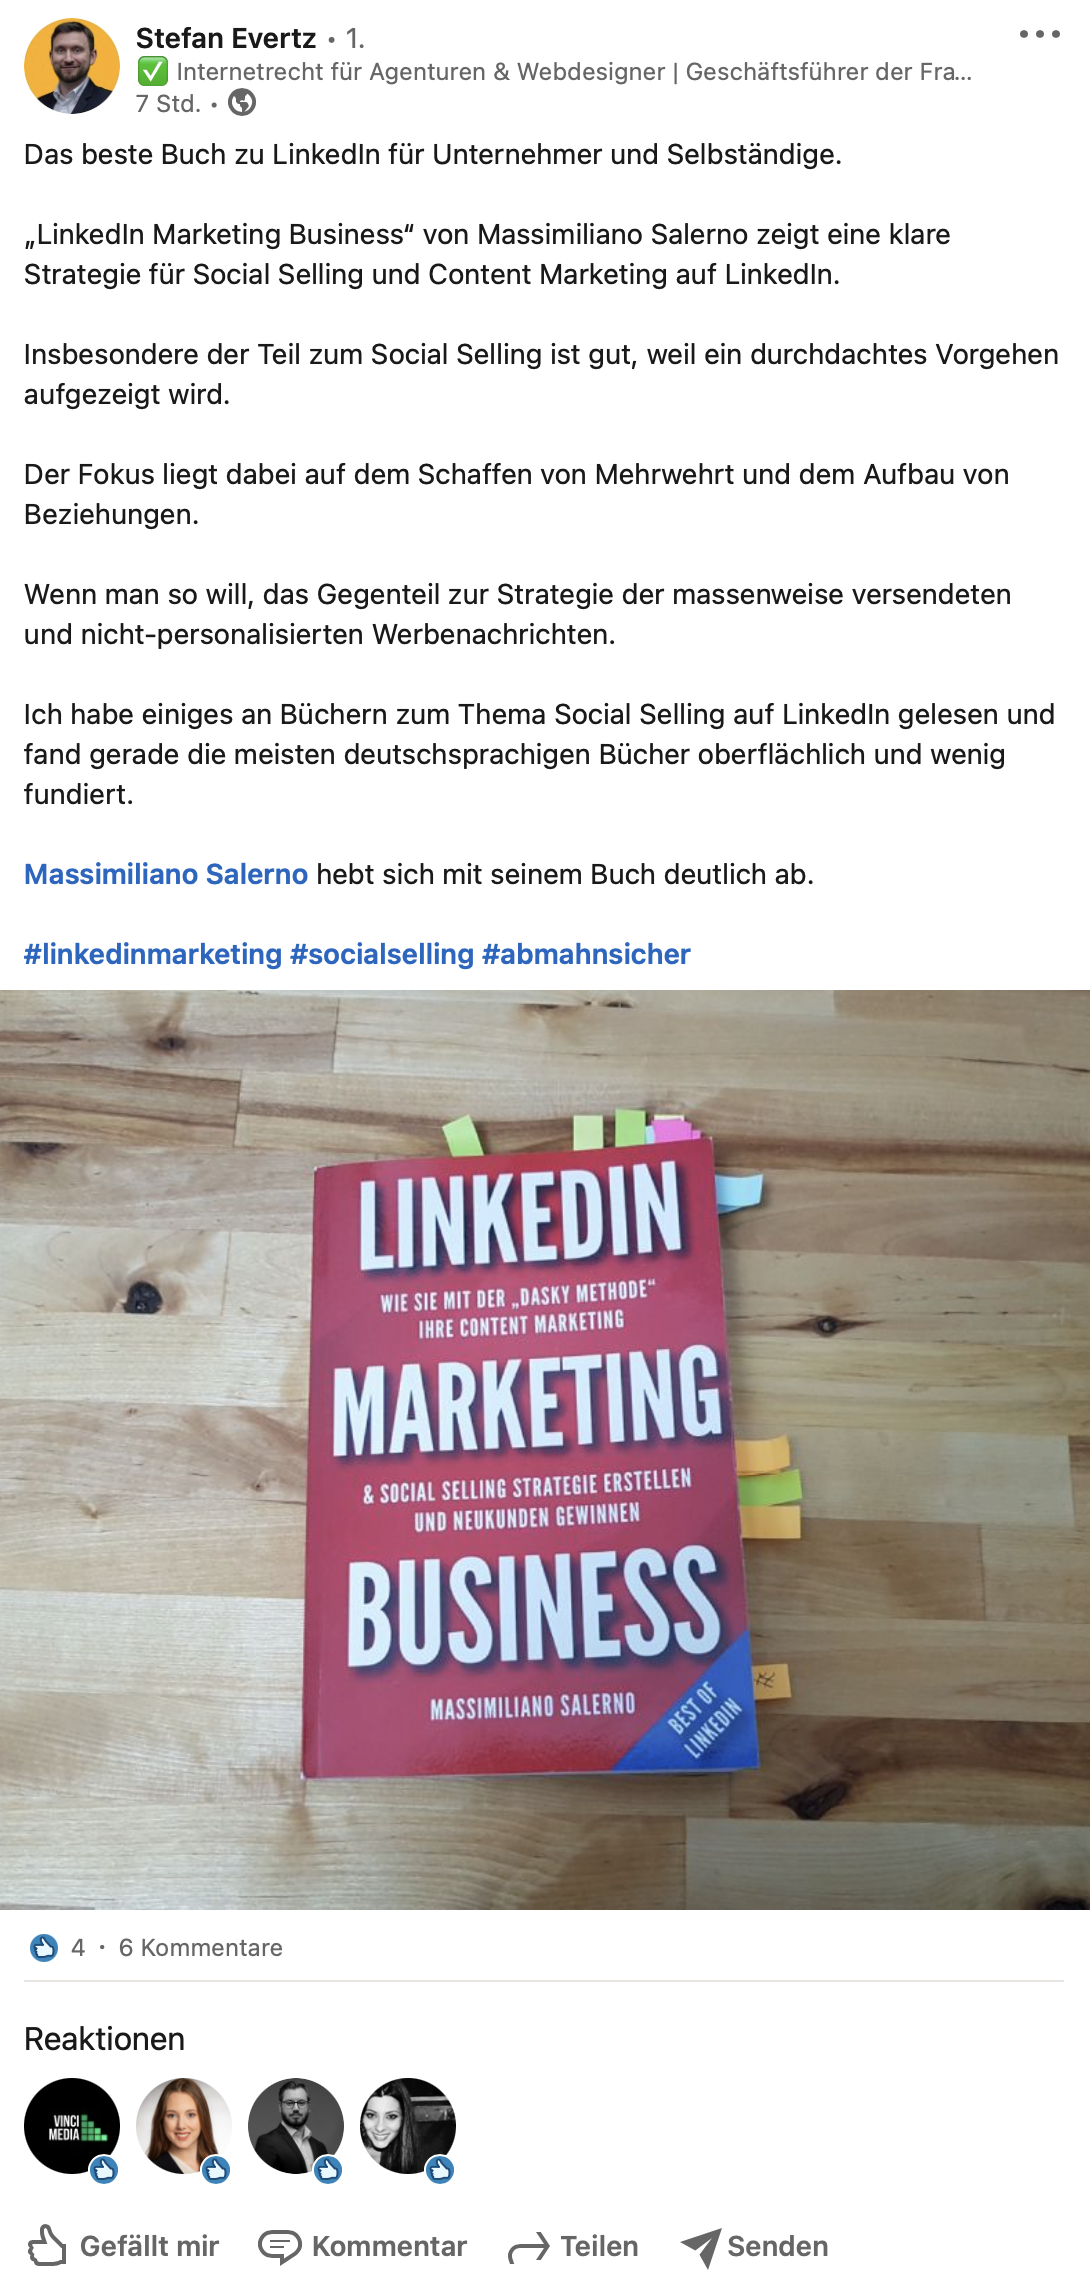 Stefan Evertz Testimonial Buch Linkedin Marketing Business von Massimiliano Salerno